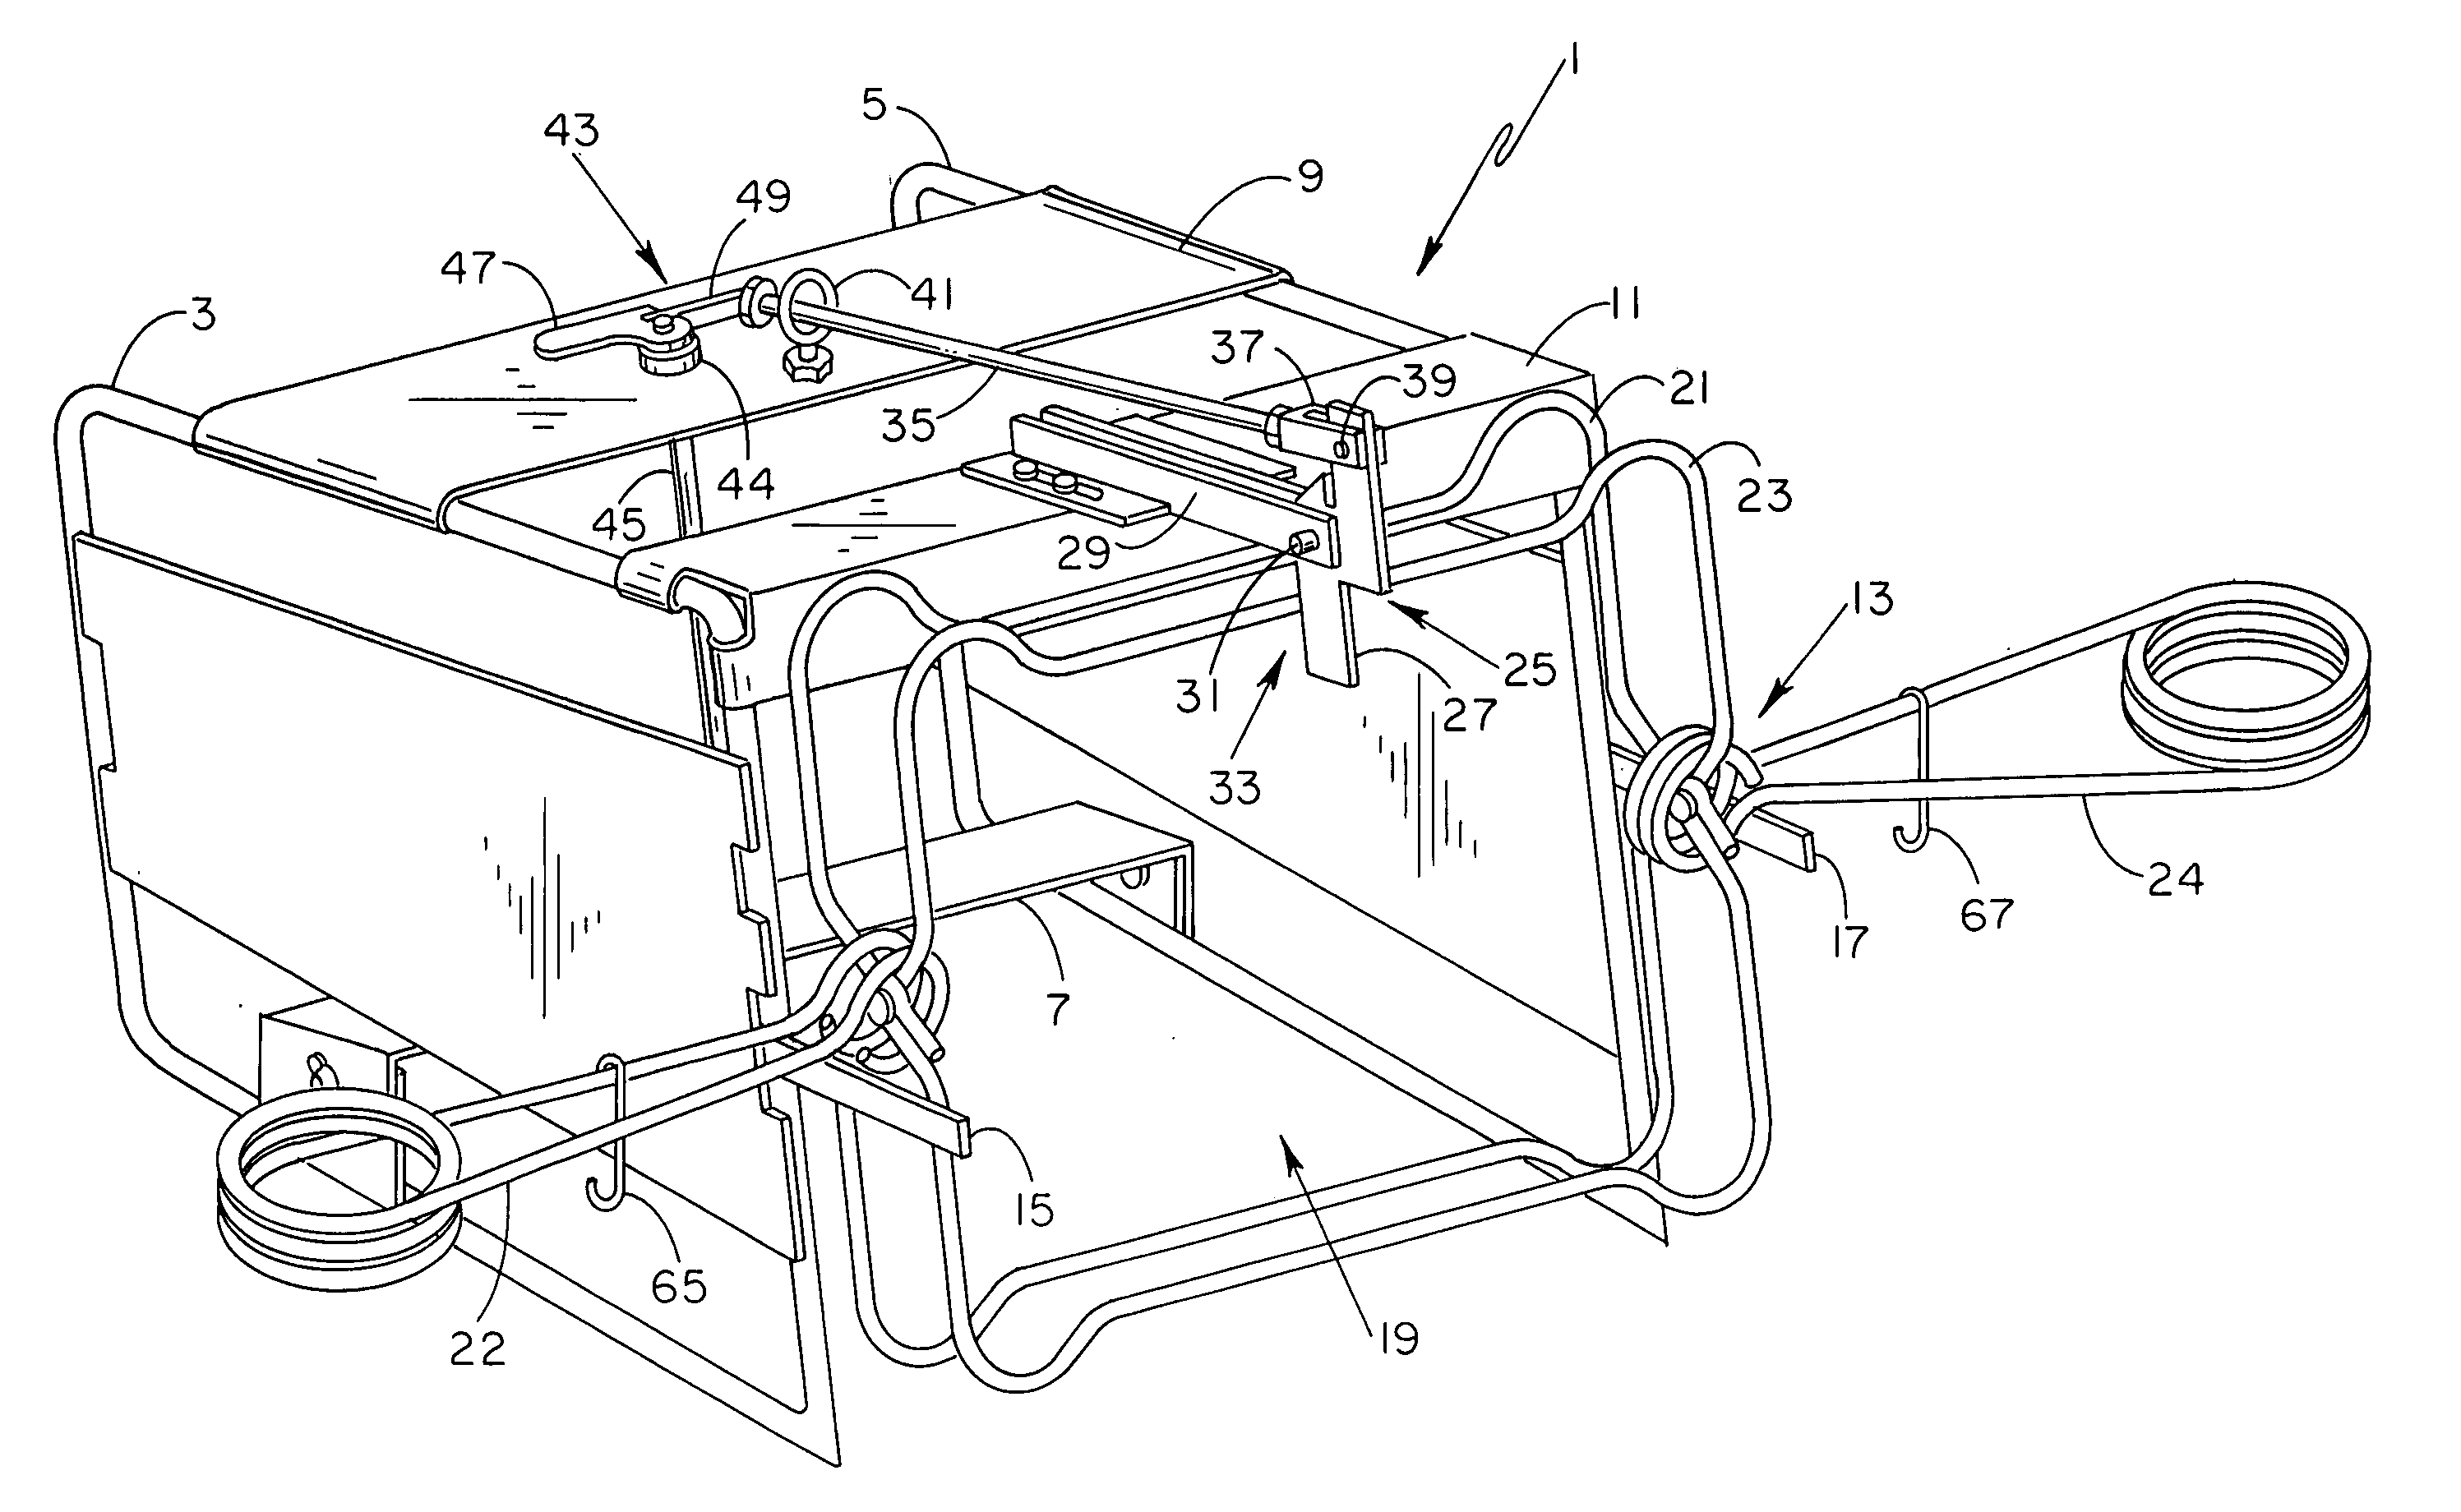 Triggering apparatus for rotating-frame animal trap